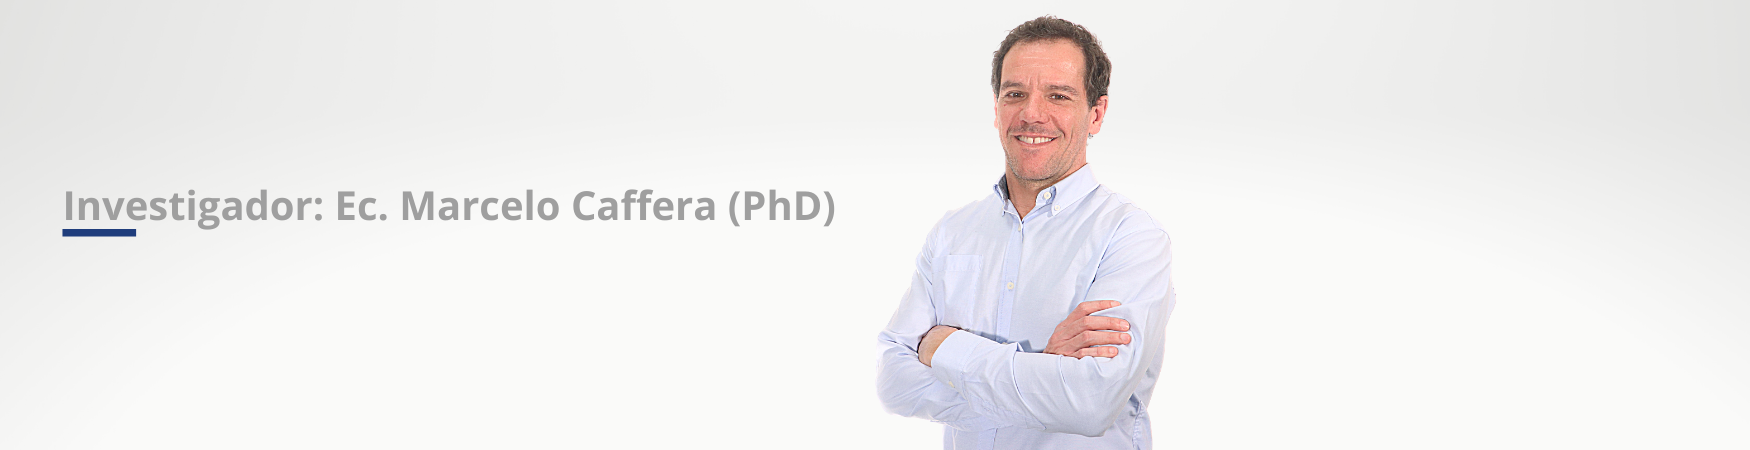 Marcelo Caffera (PhD)